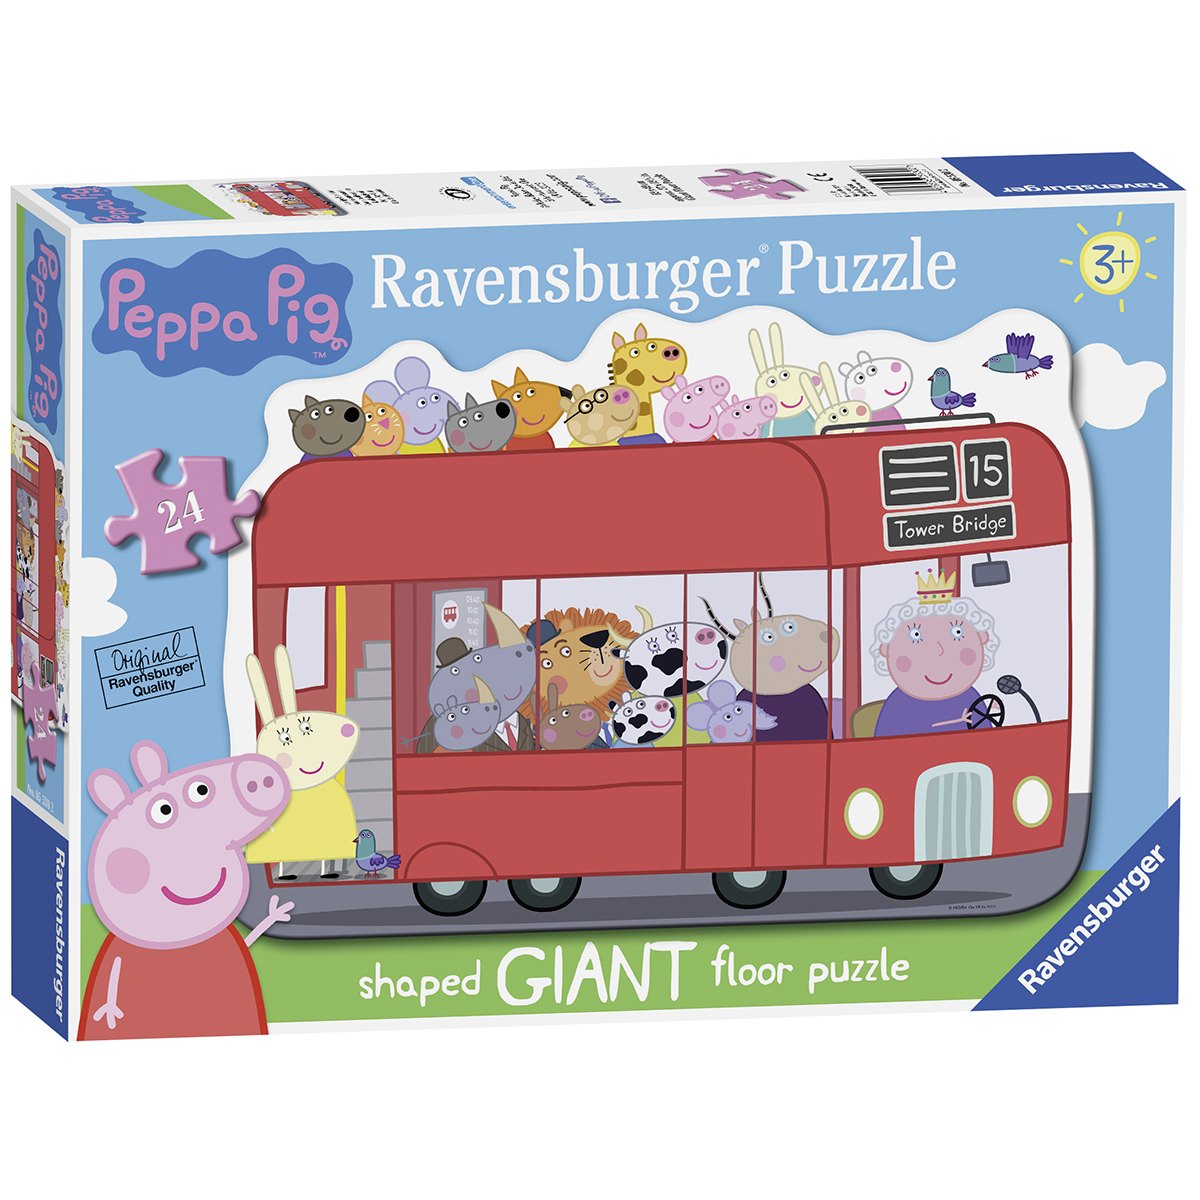 Ravensburger - puzzle 24 pezzi - formato giant - per bambini a partire dai 3 anni - peppa pig - 05530 - PEPPA PIG, RAVENSBURGER